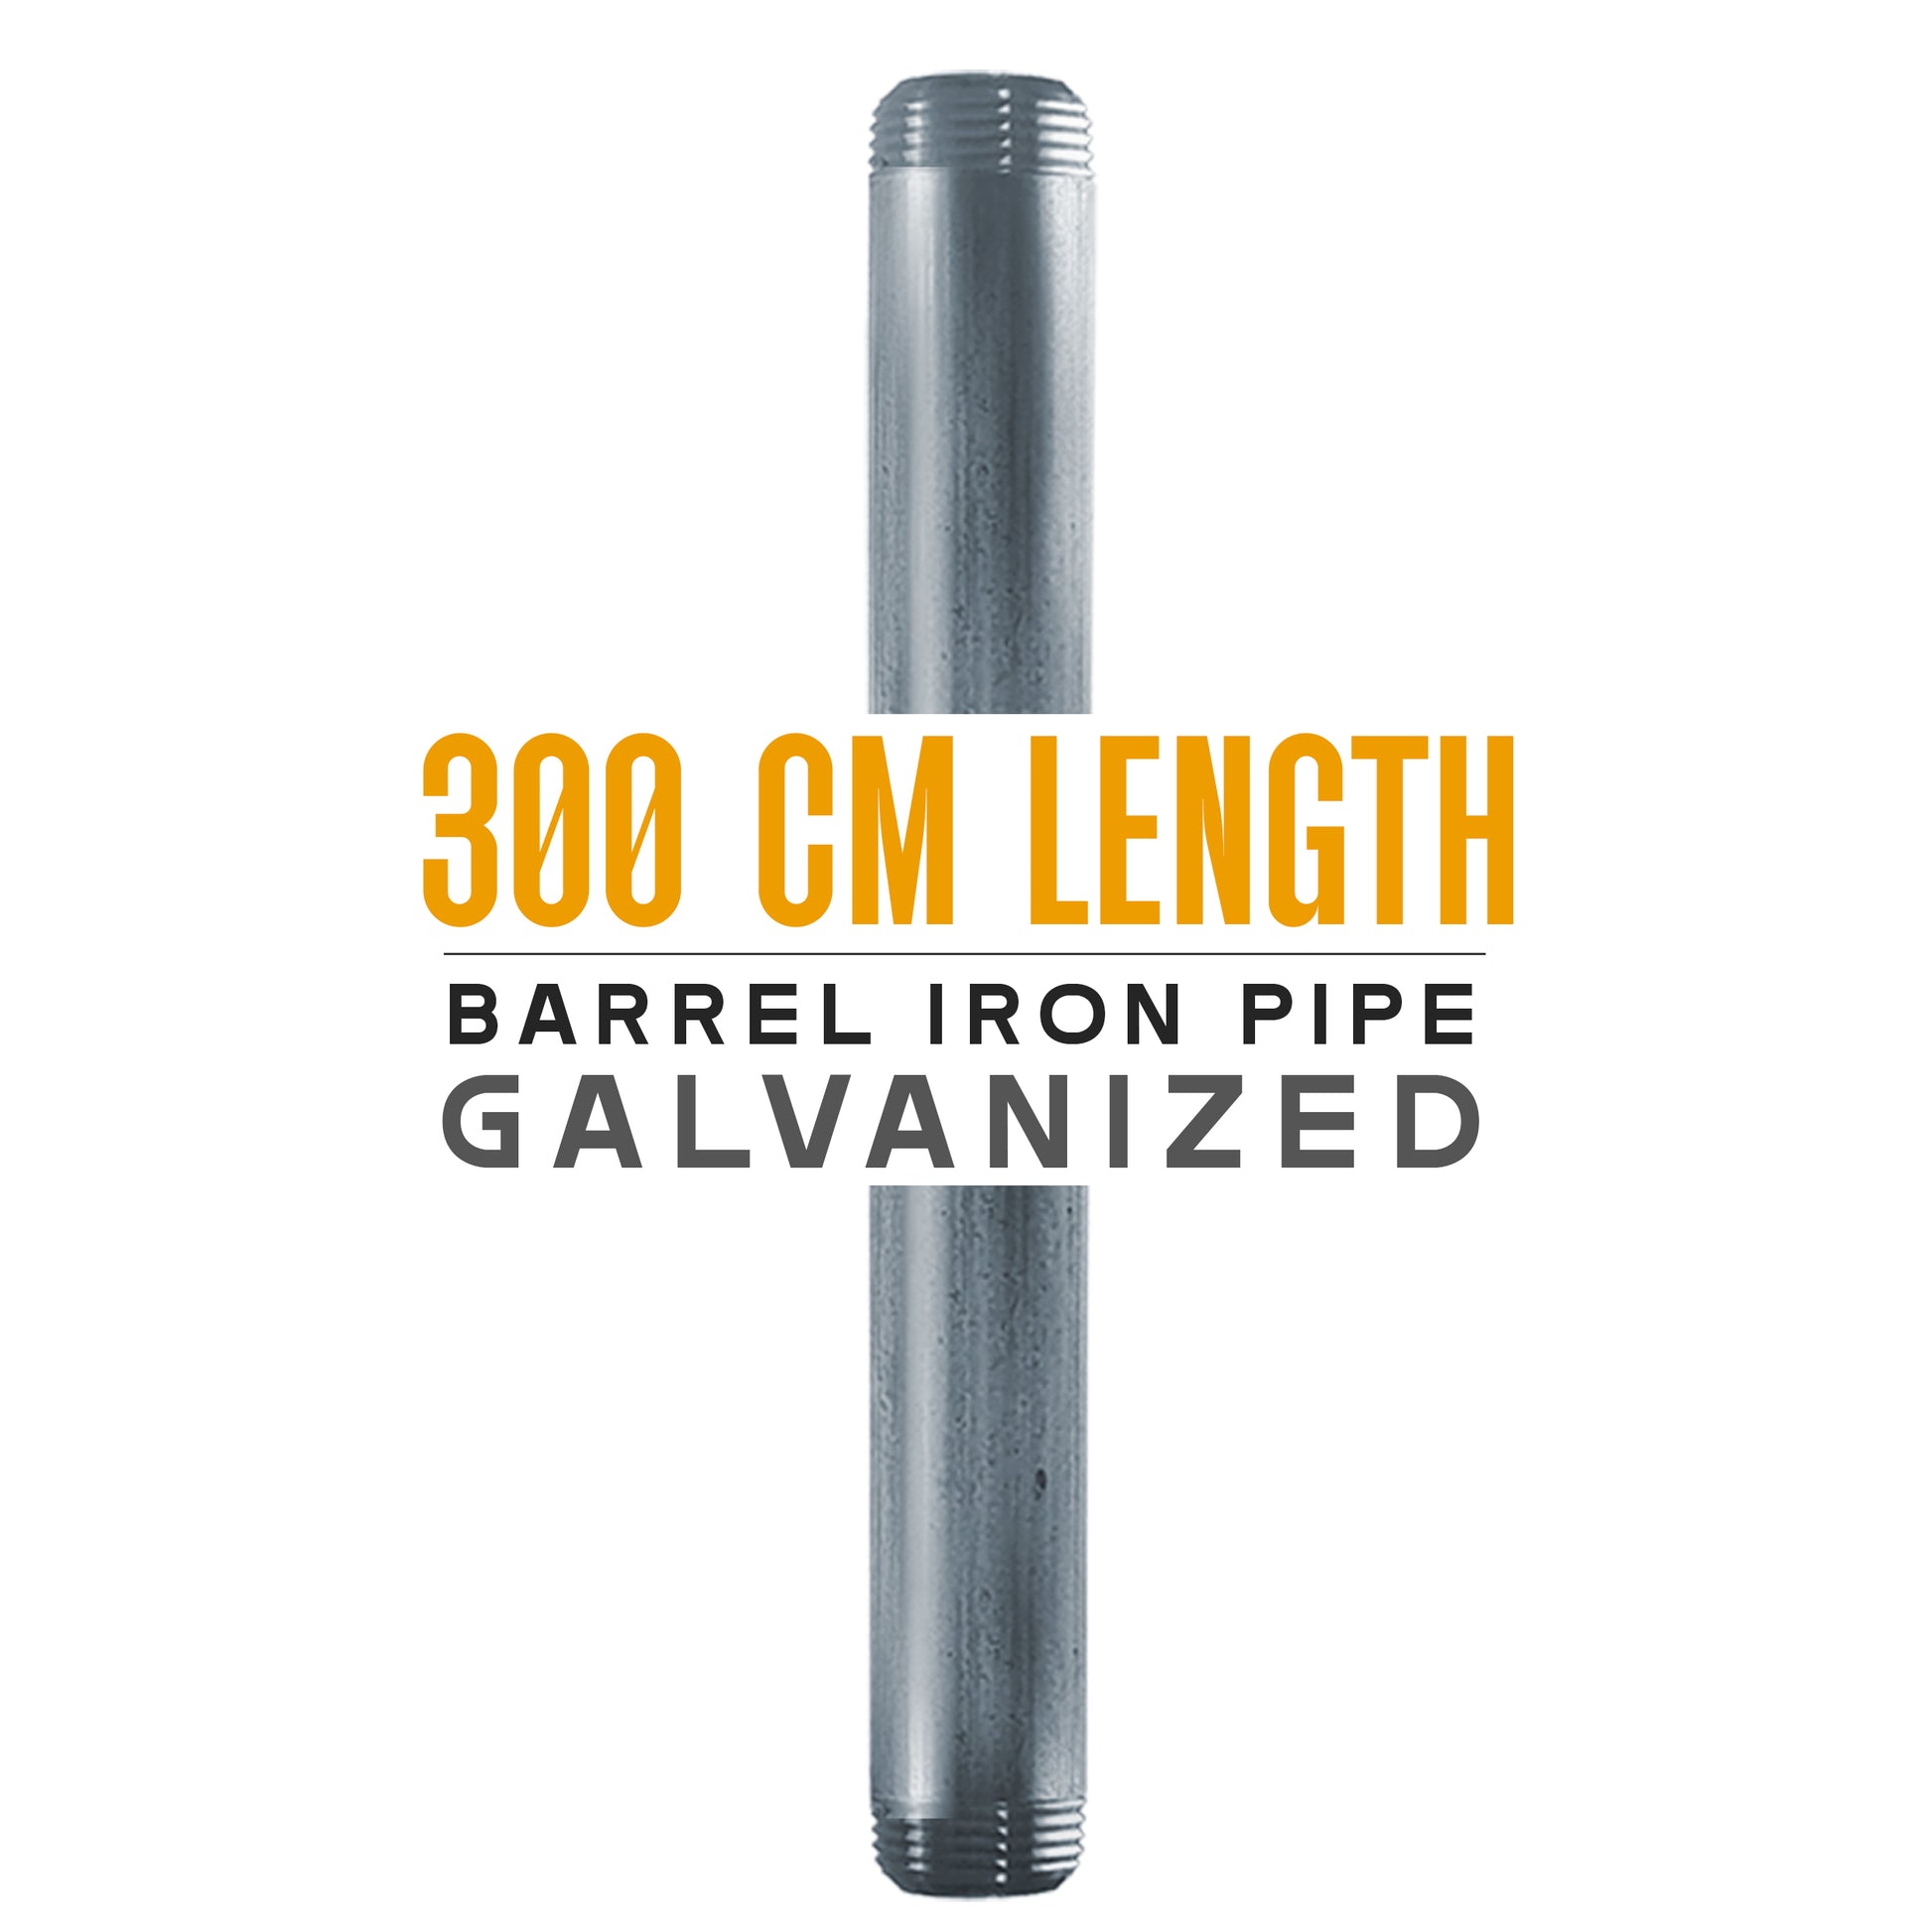 300cm ¾ BSP Galvanized MALLEABLE Tubing Iron threaded Pipe Light Fittings~4561